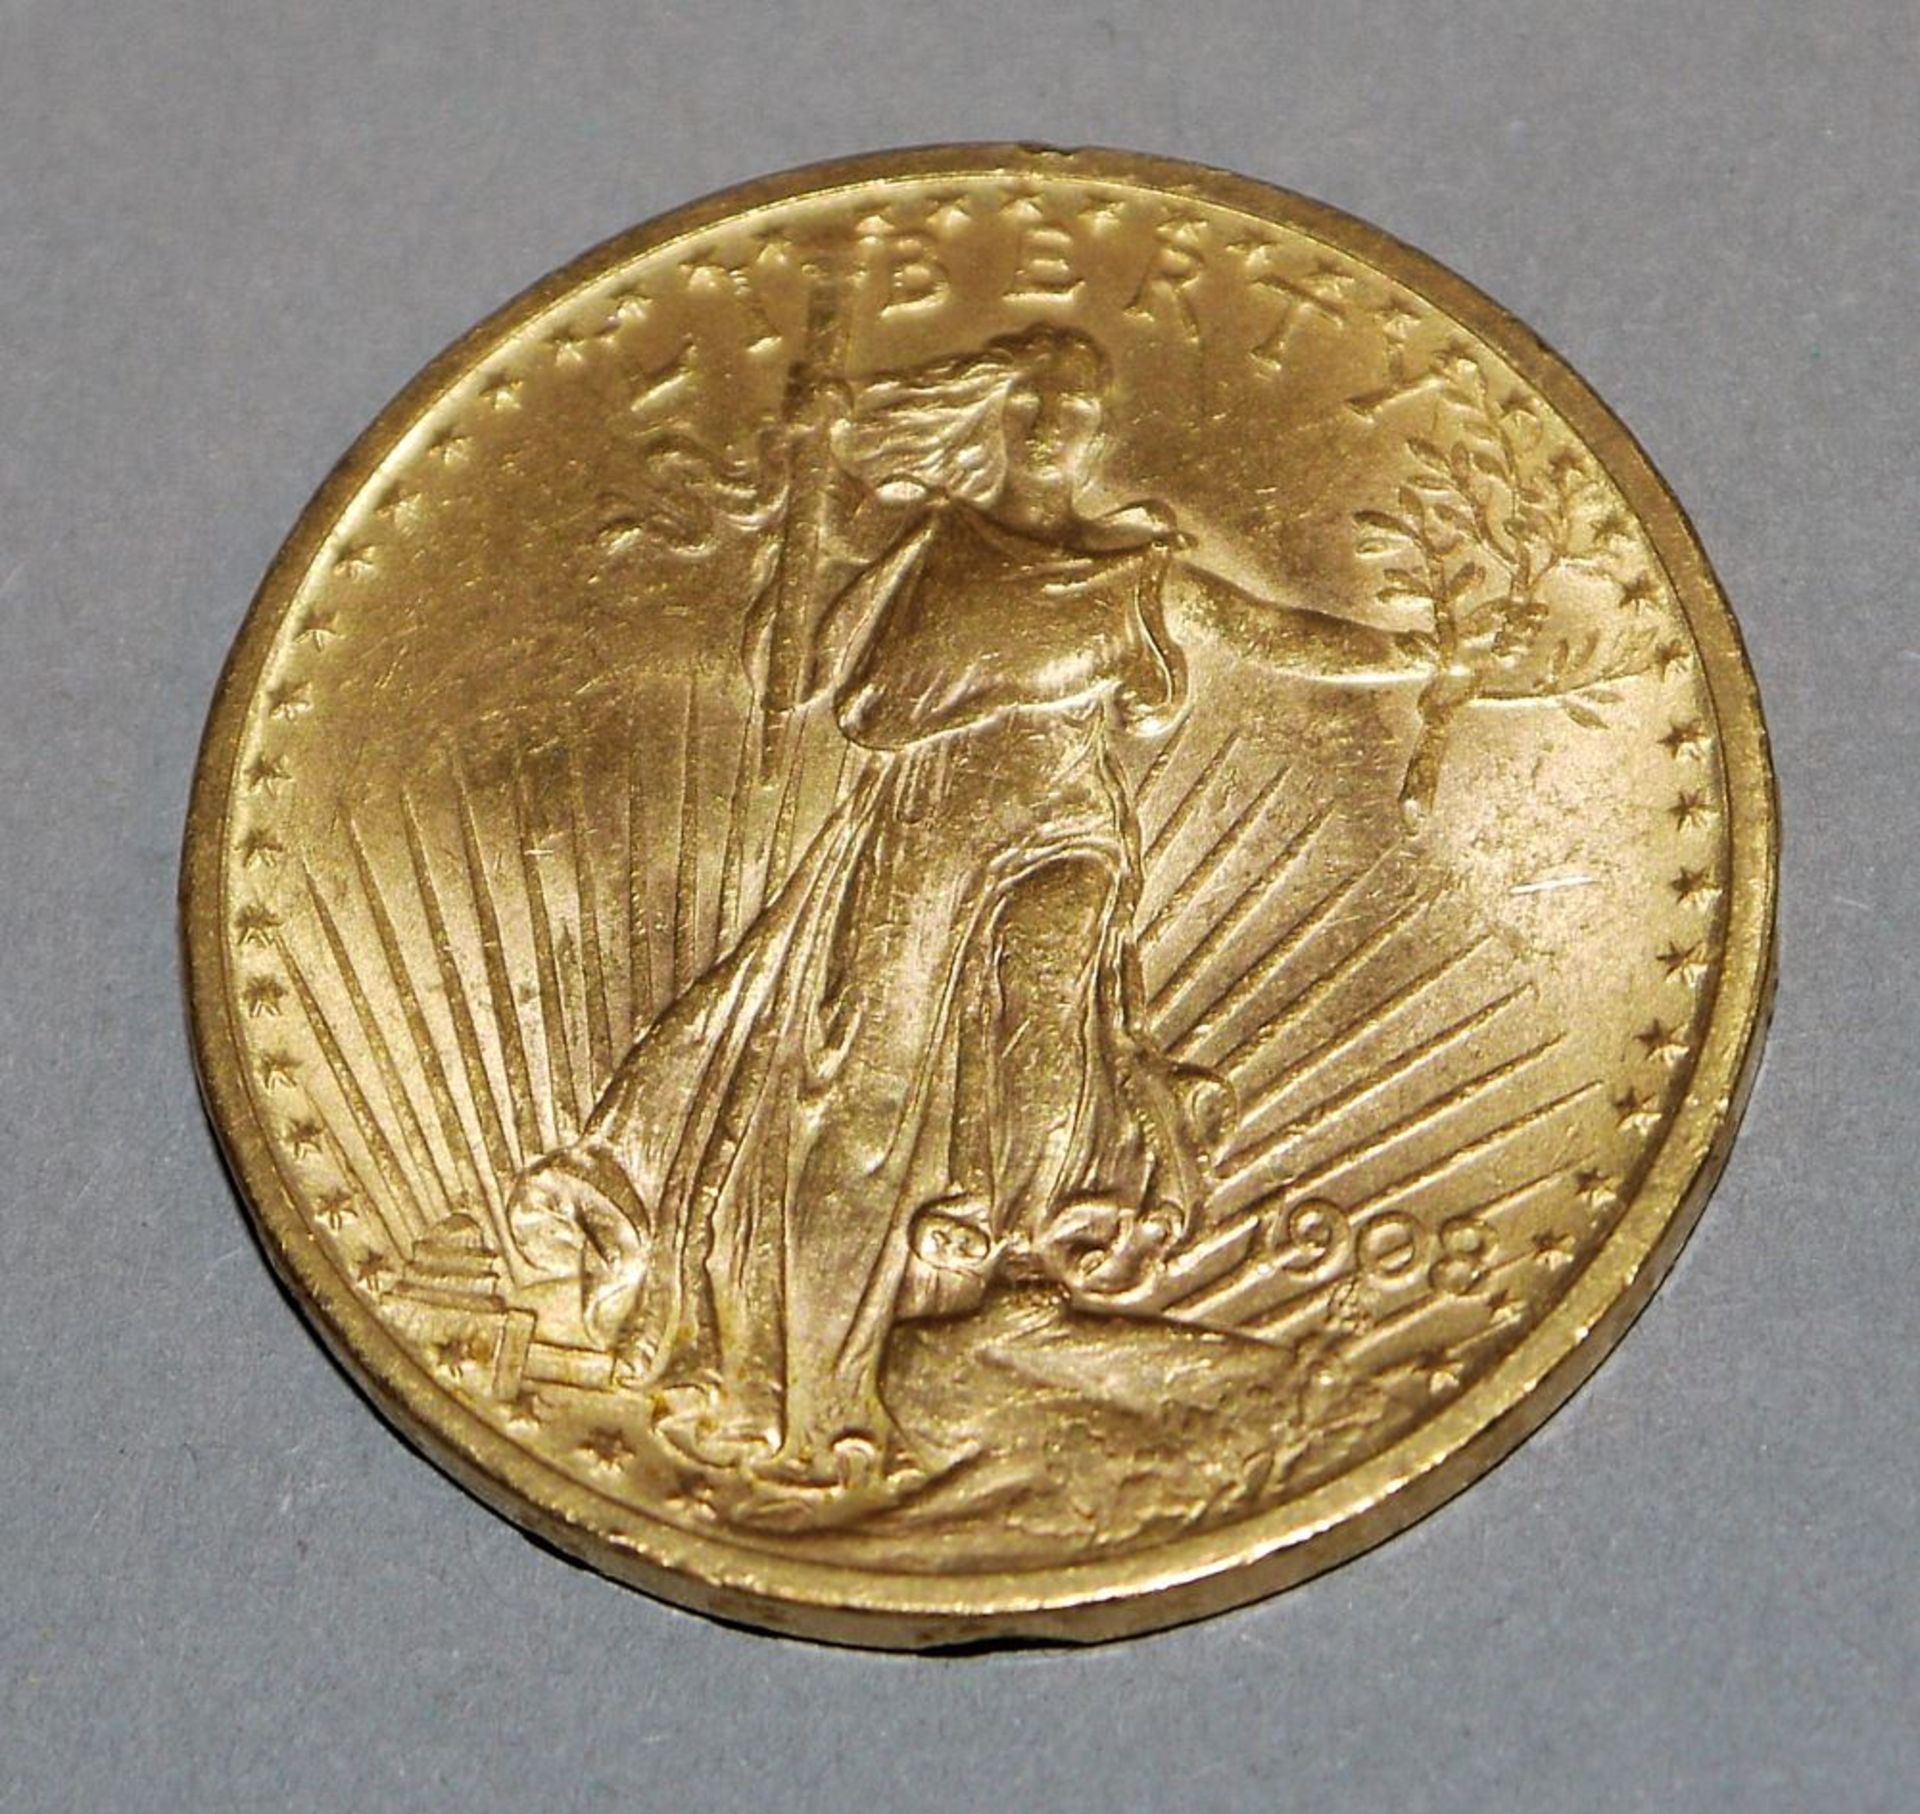 Goldmünze 20 Dollar Saint Gaudens Double Eagle USA 1908 - Image 2 of 2